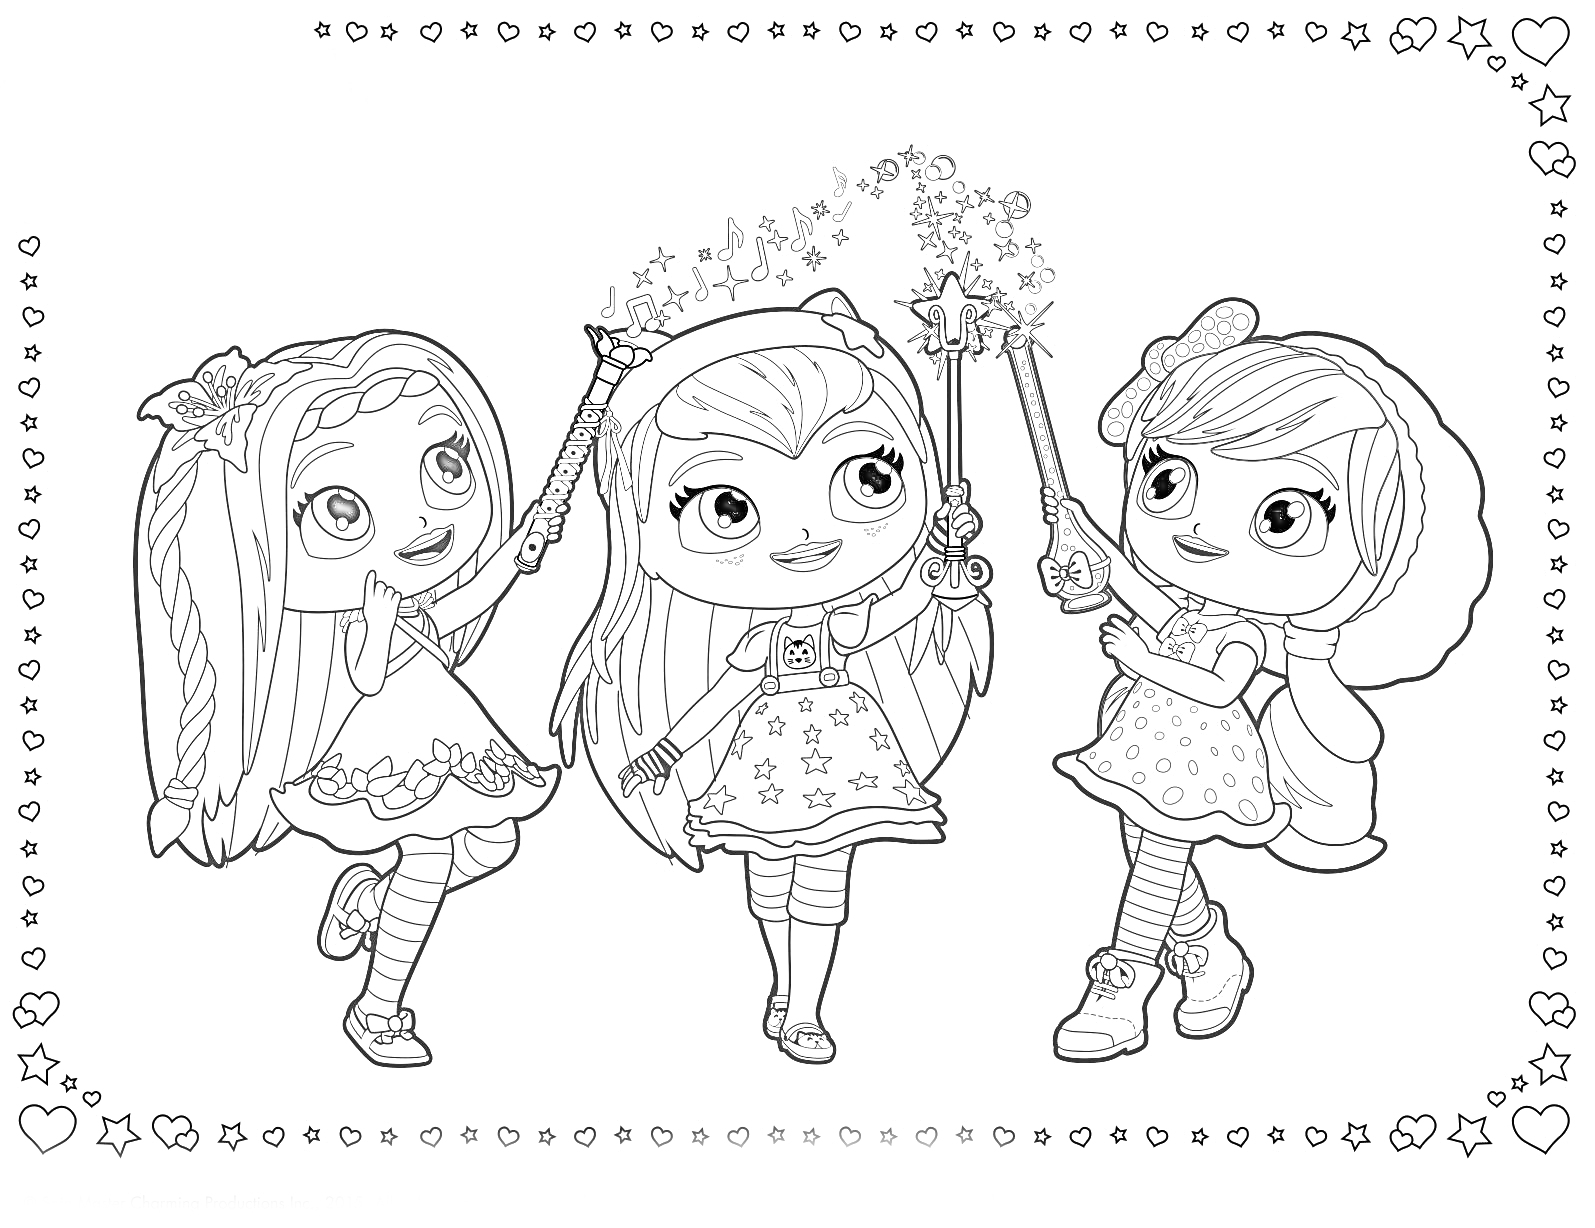 Раскраска Три девочки с волшебными палочками в рамке из звезд и сердец.